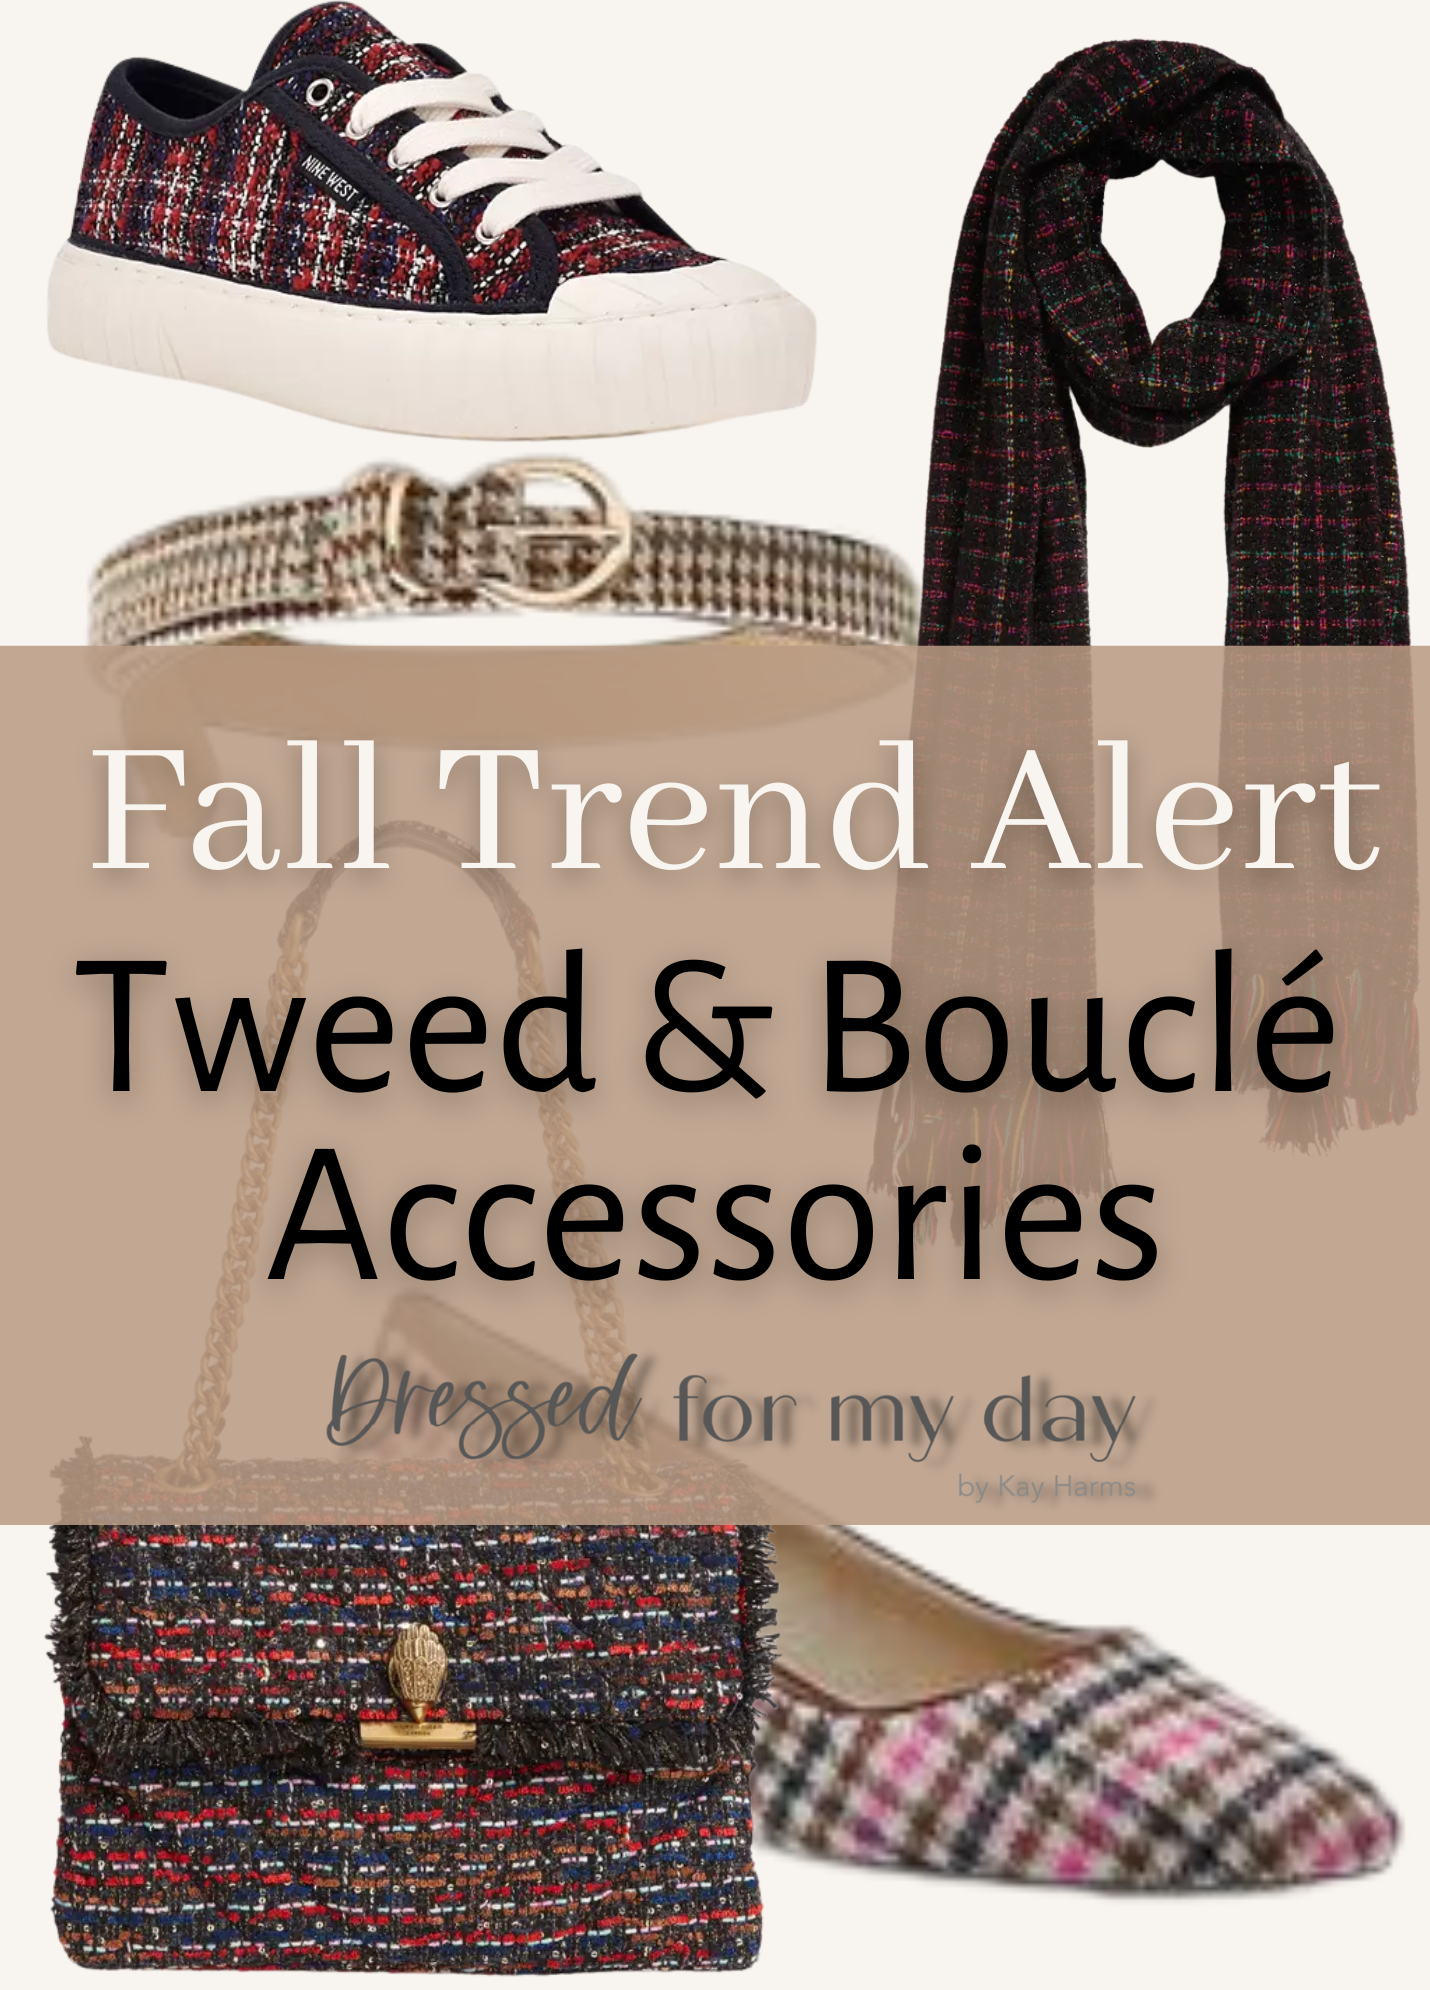 Fall Trend Alert - Tweed & Boucle Accessories